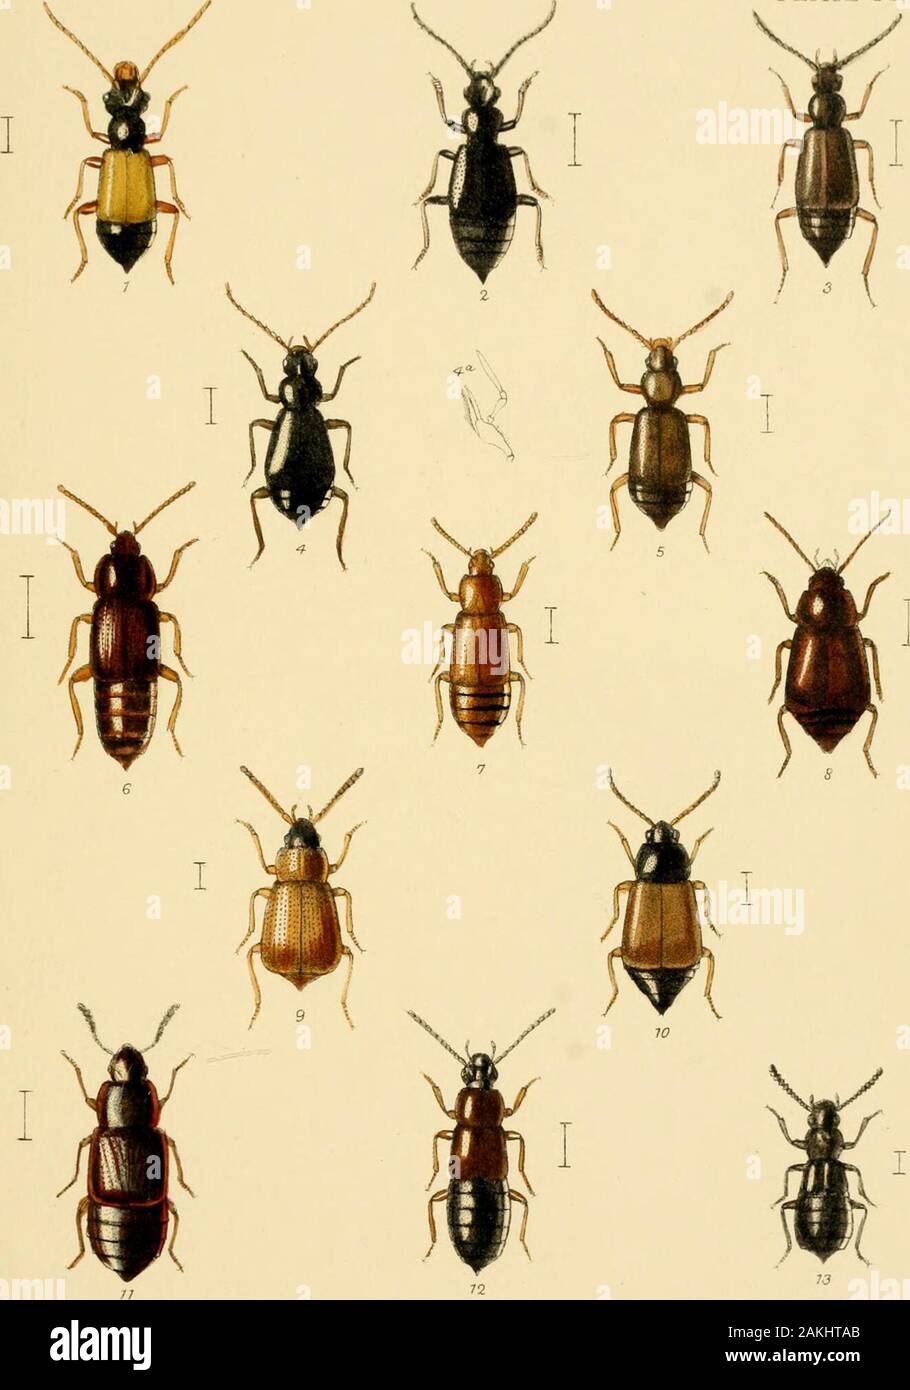 The Coleoptera of the British islandsA descriptive account of the families, genera, and species indigenous to Great Britain and Ireland, with notes as to localities, habitats, etc . Rlfcgan.del. etitii. i:ioerttBrooksDay&SoiiJmp L Reeve &C° London. :;ty U5A PLATE LXVIII. Fig. 1. Anthophagns alpiuus, Pai/k. (male). 2. Geodvomicus nigrita, Hull. 8. Lesteva longelytrata, Goeze. 4. ,, pubescens, Mannh.4a. „ ,, maxilla. 5. ,, sicula, Er. [punctata, Brit. Cat.).G. Acidota crenata, F. 7. „ cruentata, Mannh, 8. Olophrum piceum, Gyll. 9. Lathrimfeum atrocepliakim, Gyll. 10. Delipbrum tectum, Fayh. 11. Stock Photo